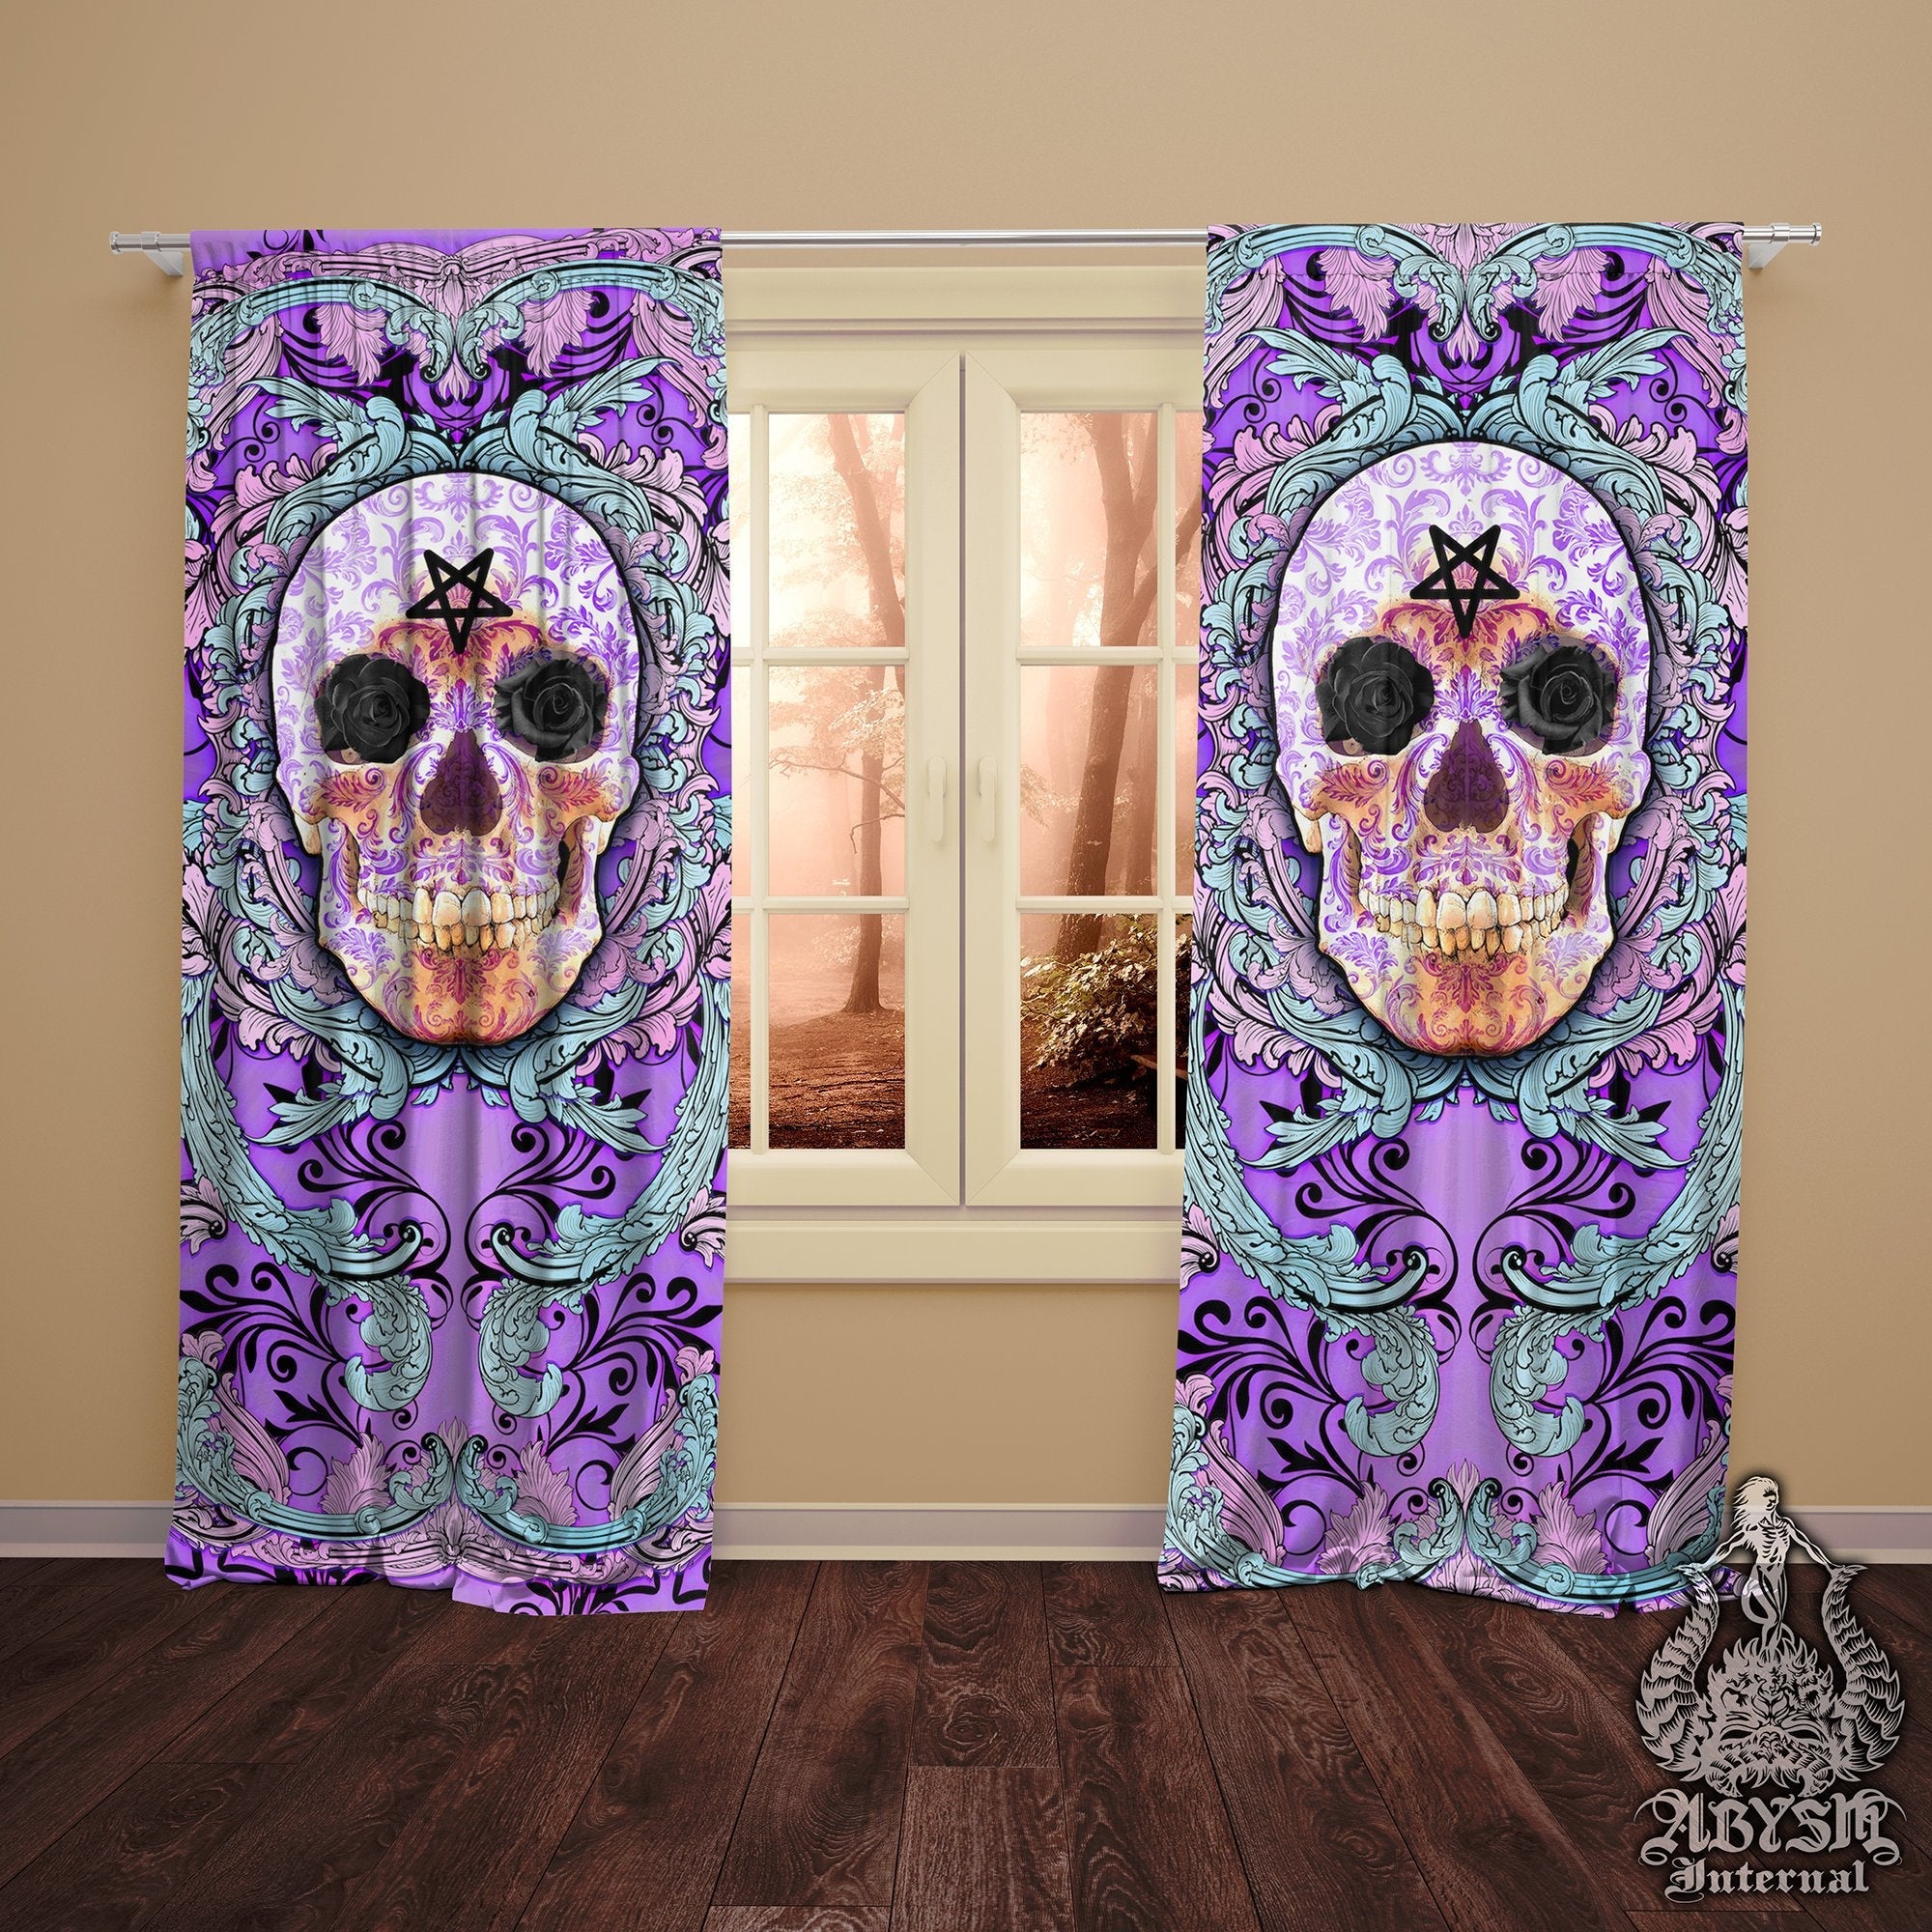 Pastel Goth Blackout Curtains, Long Window Panels, Macabre Skull Room Decor, Purple - Abysm Internal